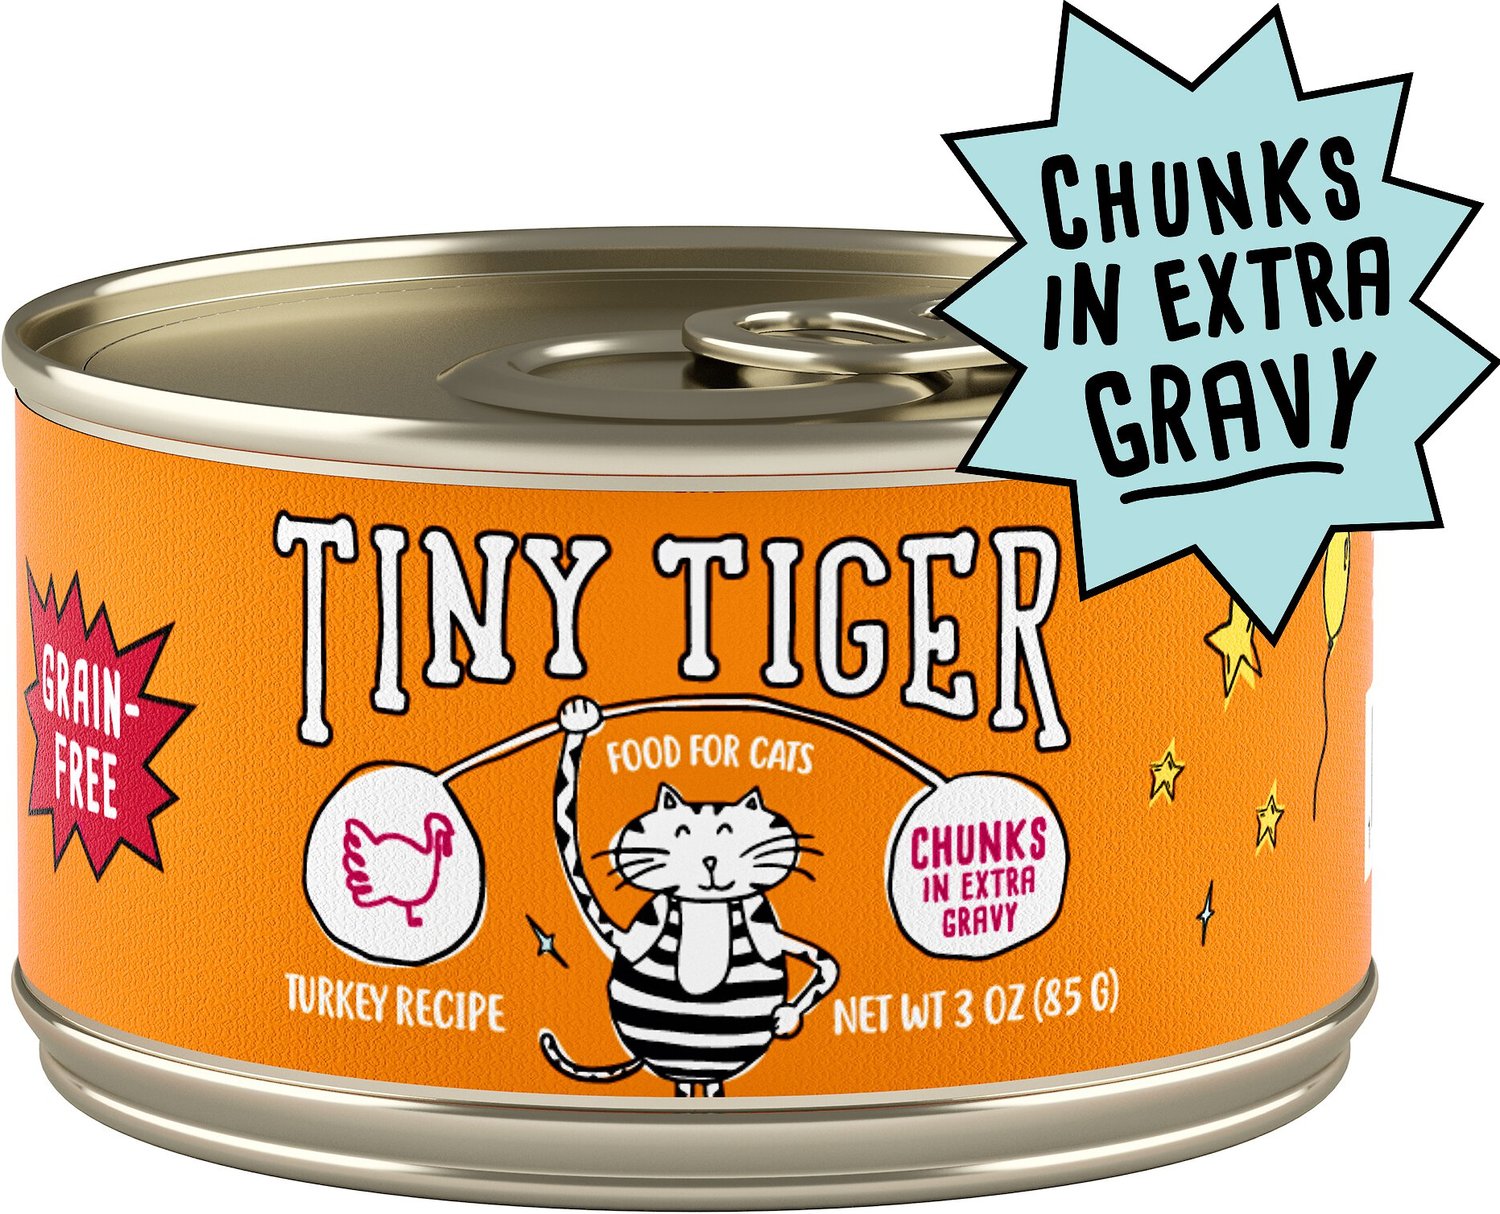 TINY TIGER Chunks in EXTRA Gravy Turkey Recipe GrainFree Canned Cat